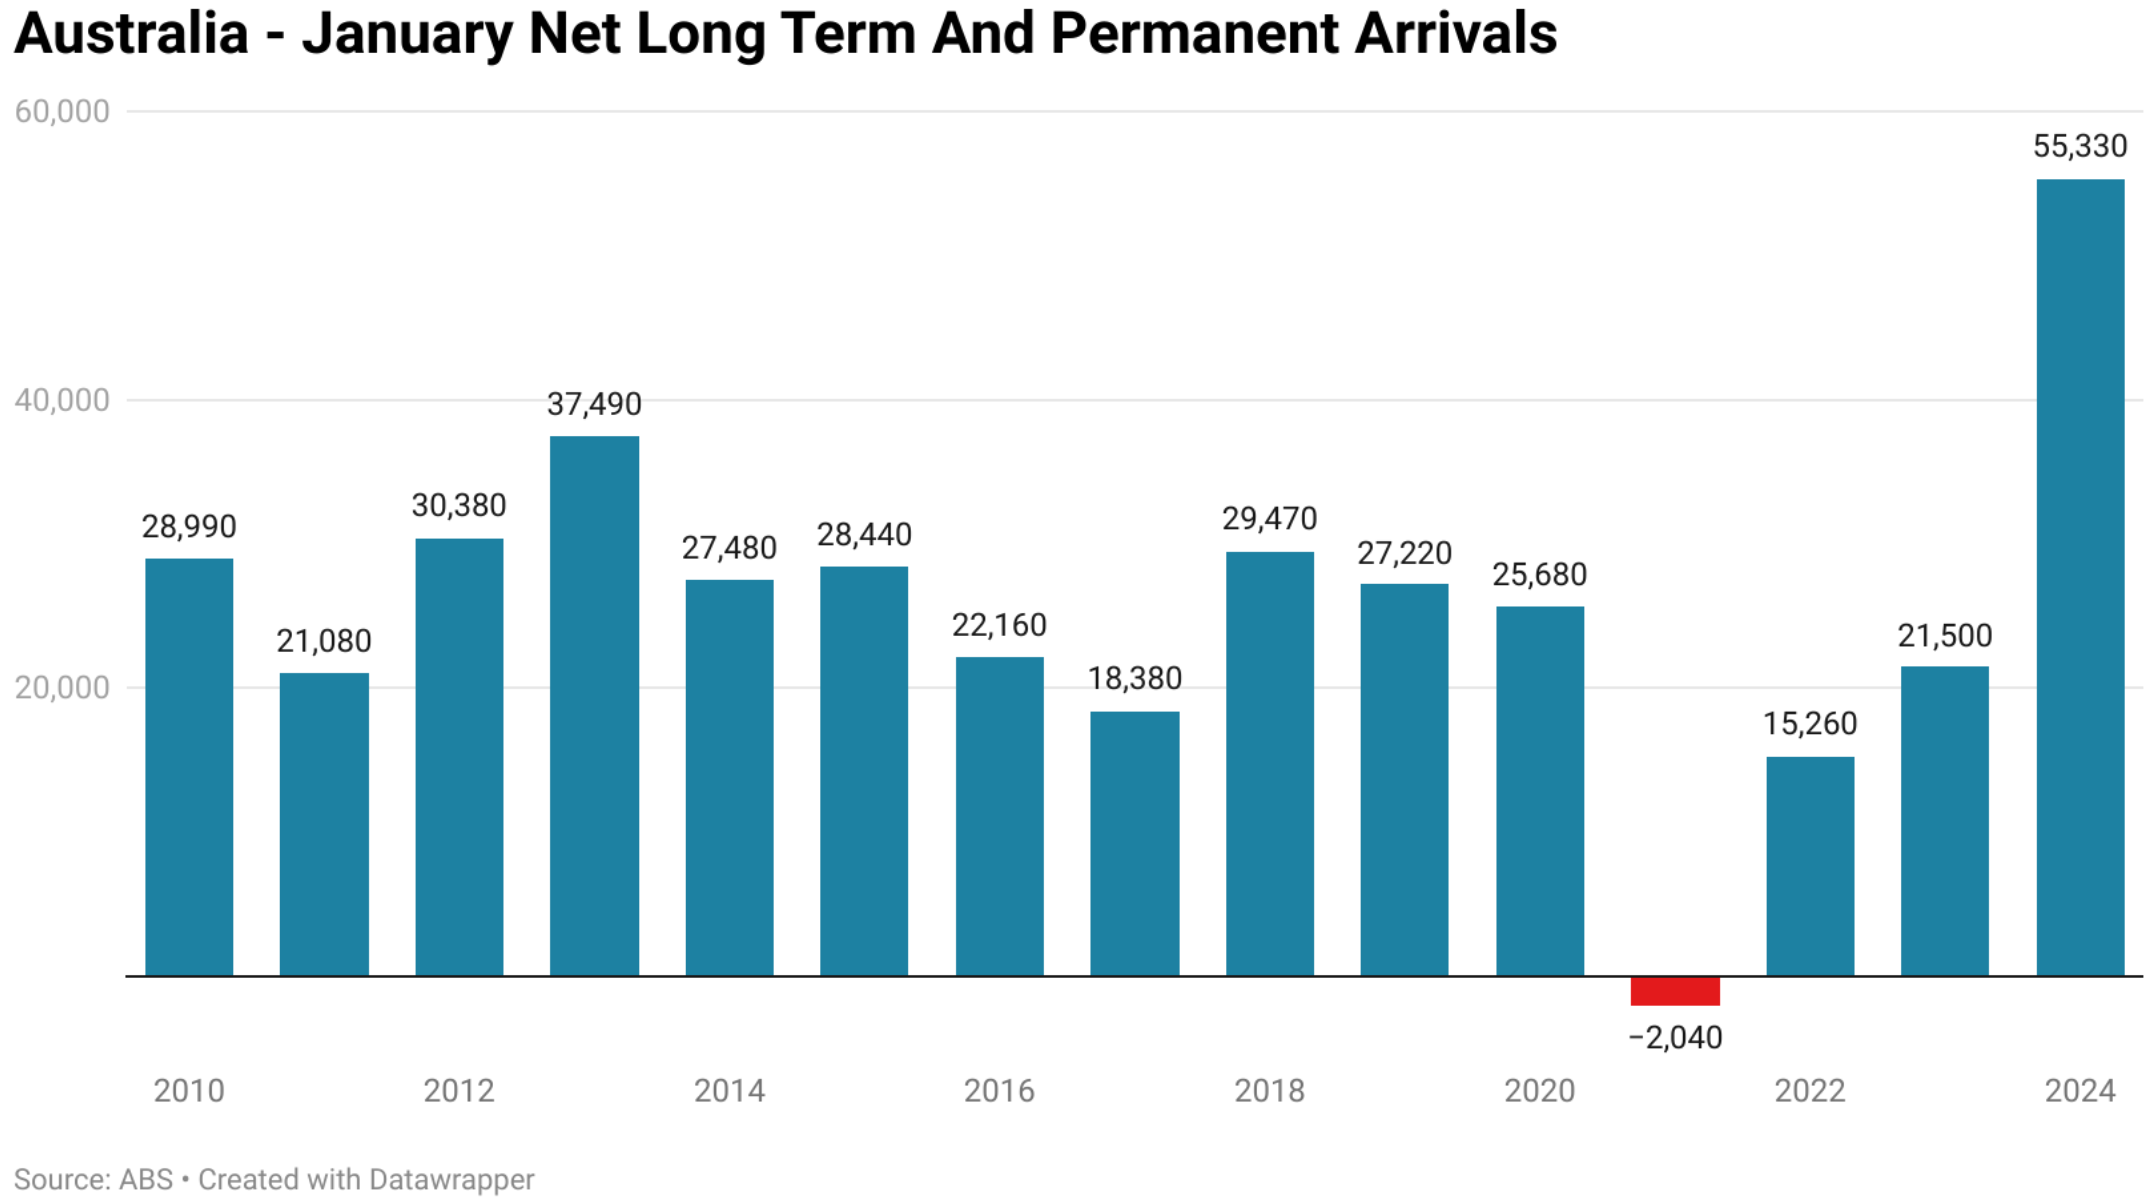 January net long-term arrivals